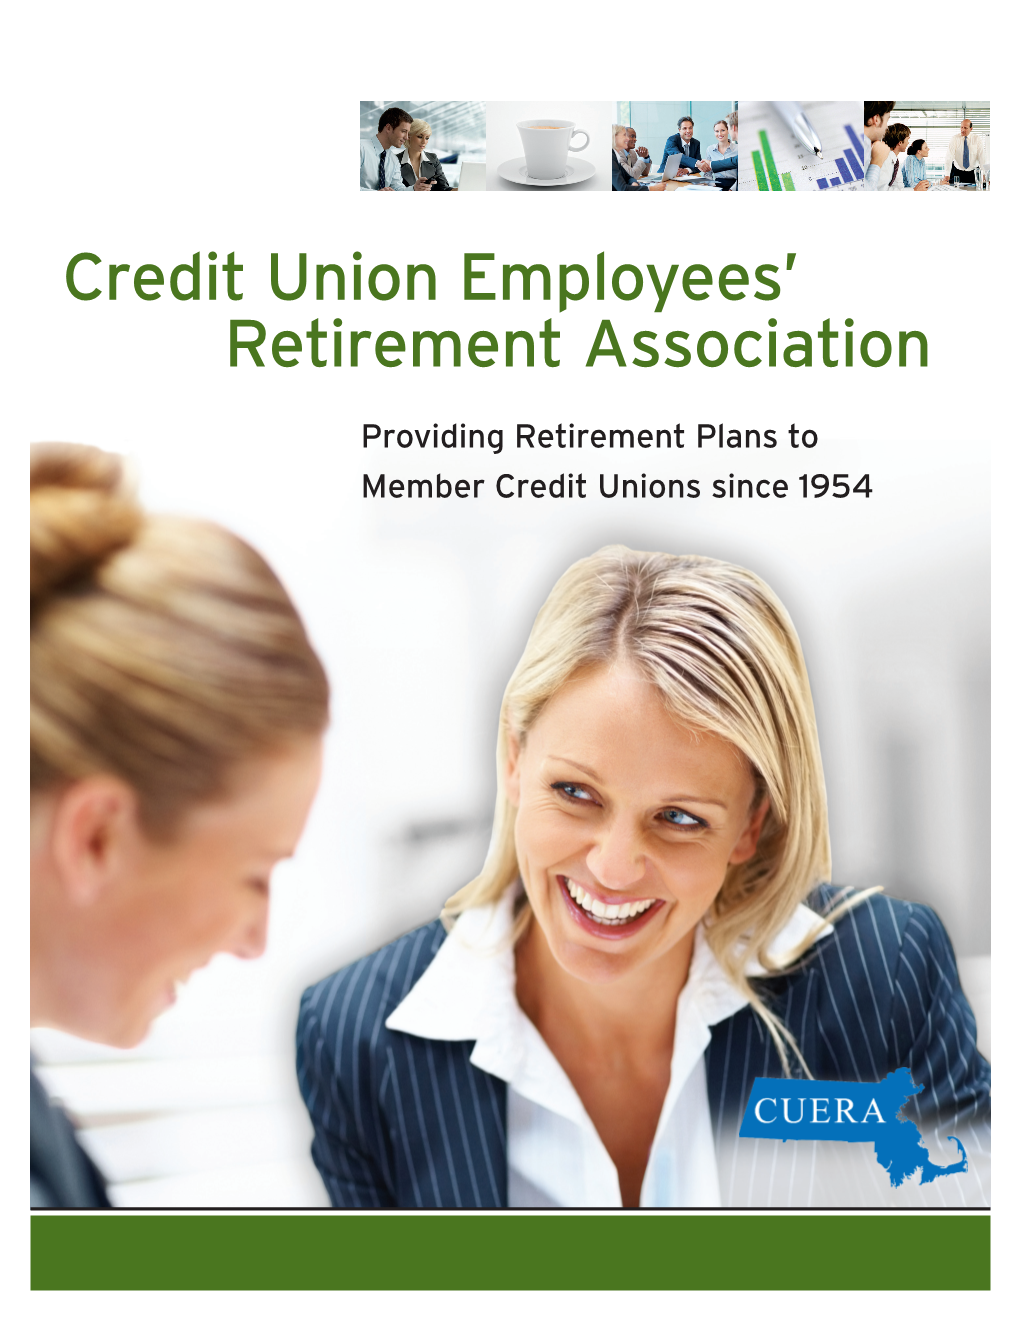 Credit Union Employees' Retirement Association